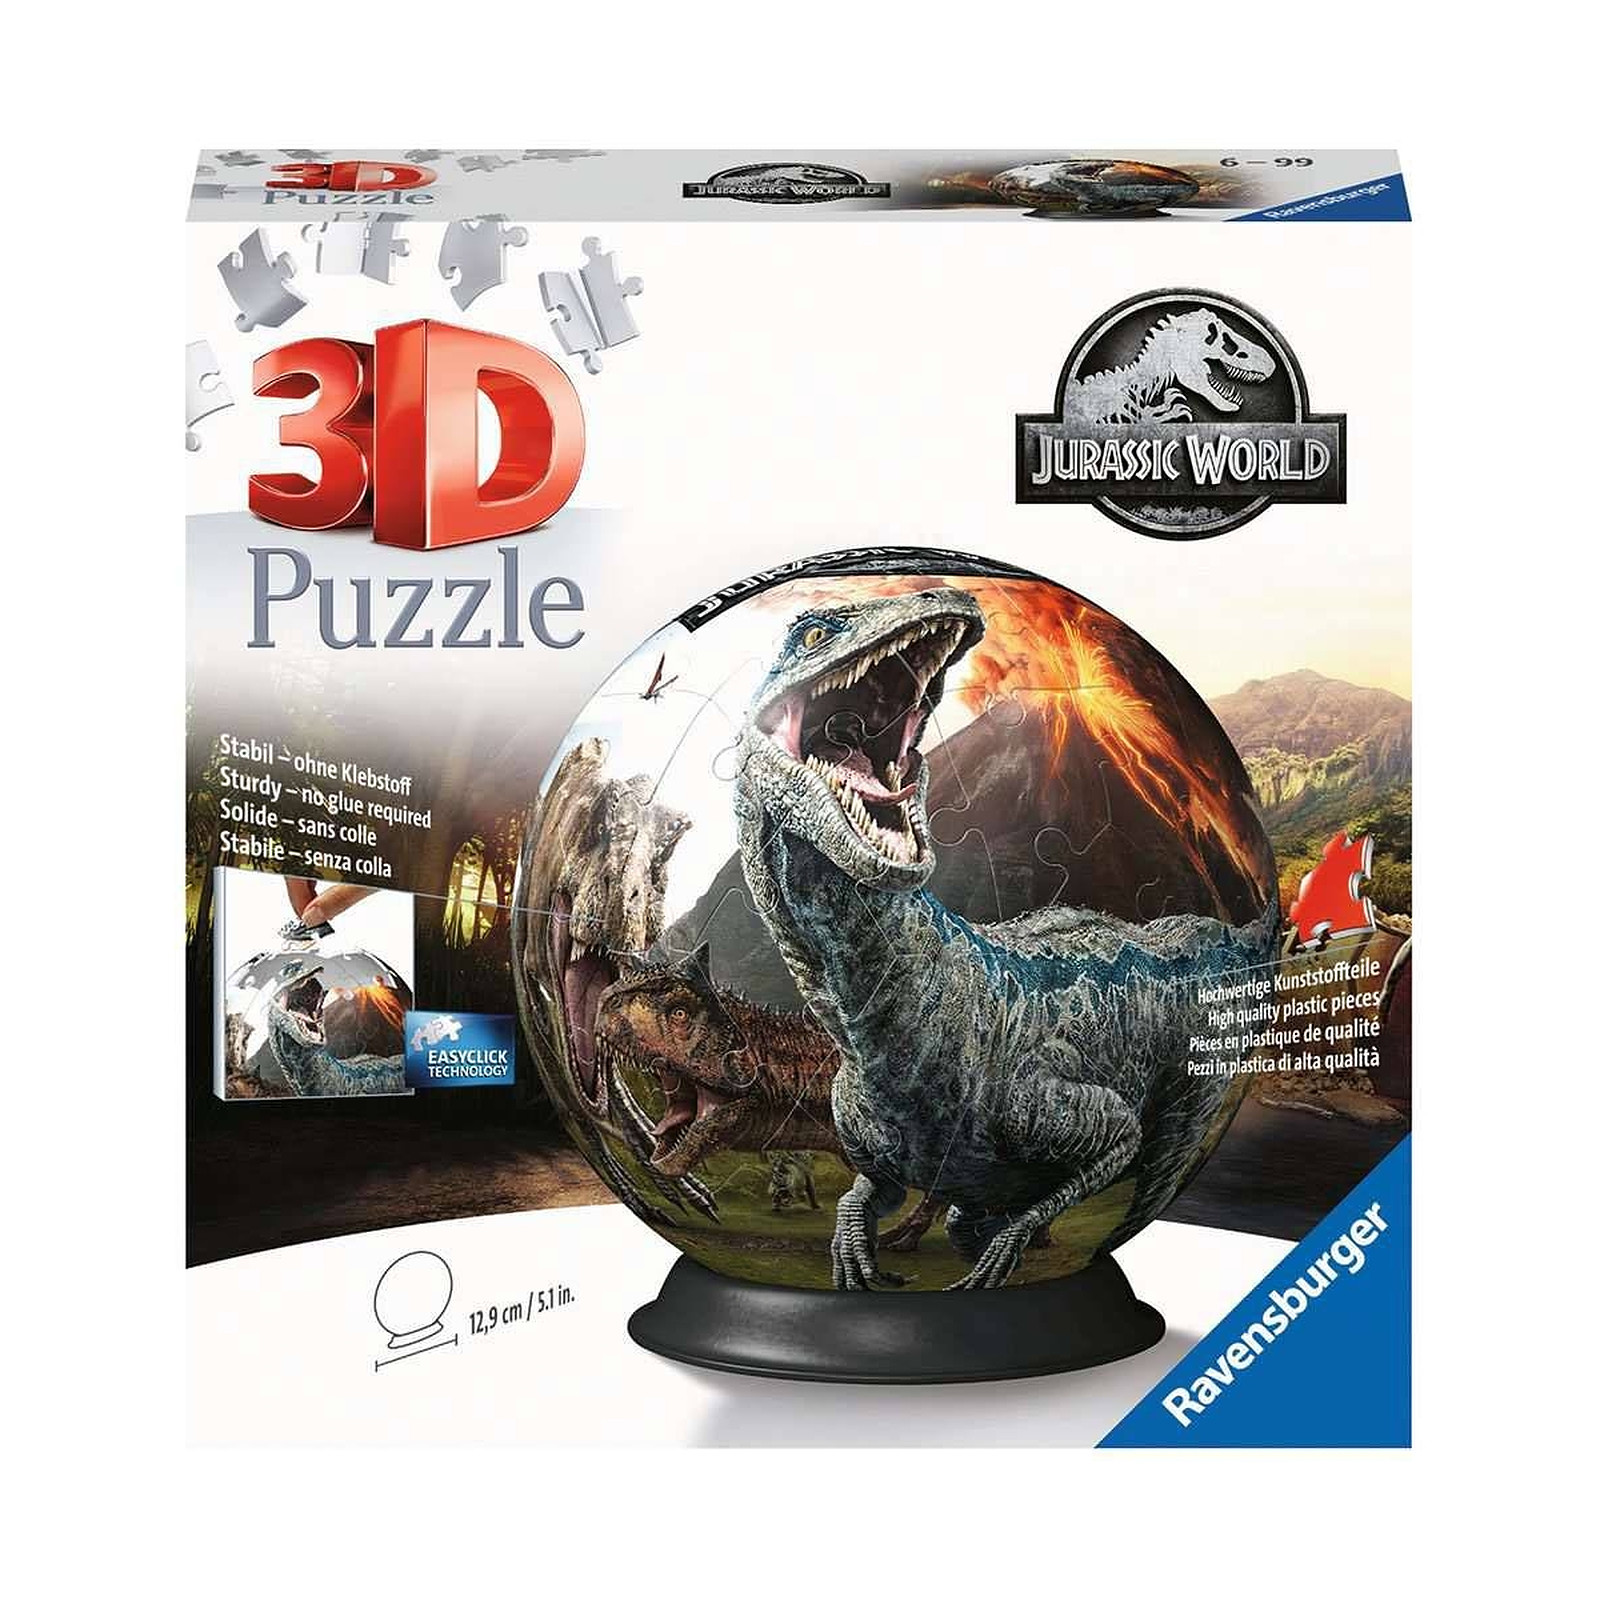 Jurassic World - Puzzle 3D Ball (72 pièces) - Puzzle Ravensburger